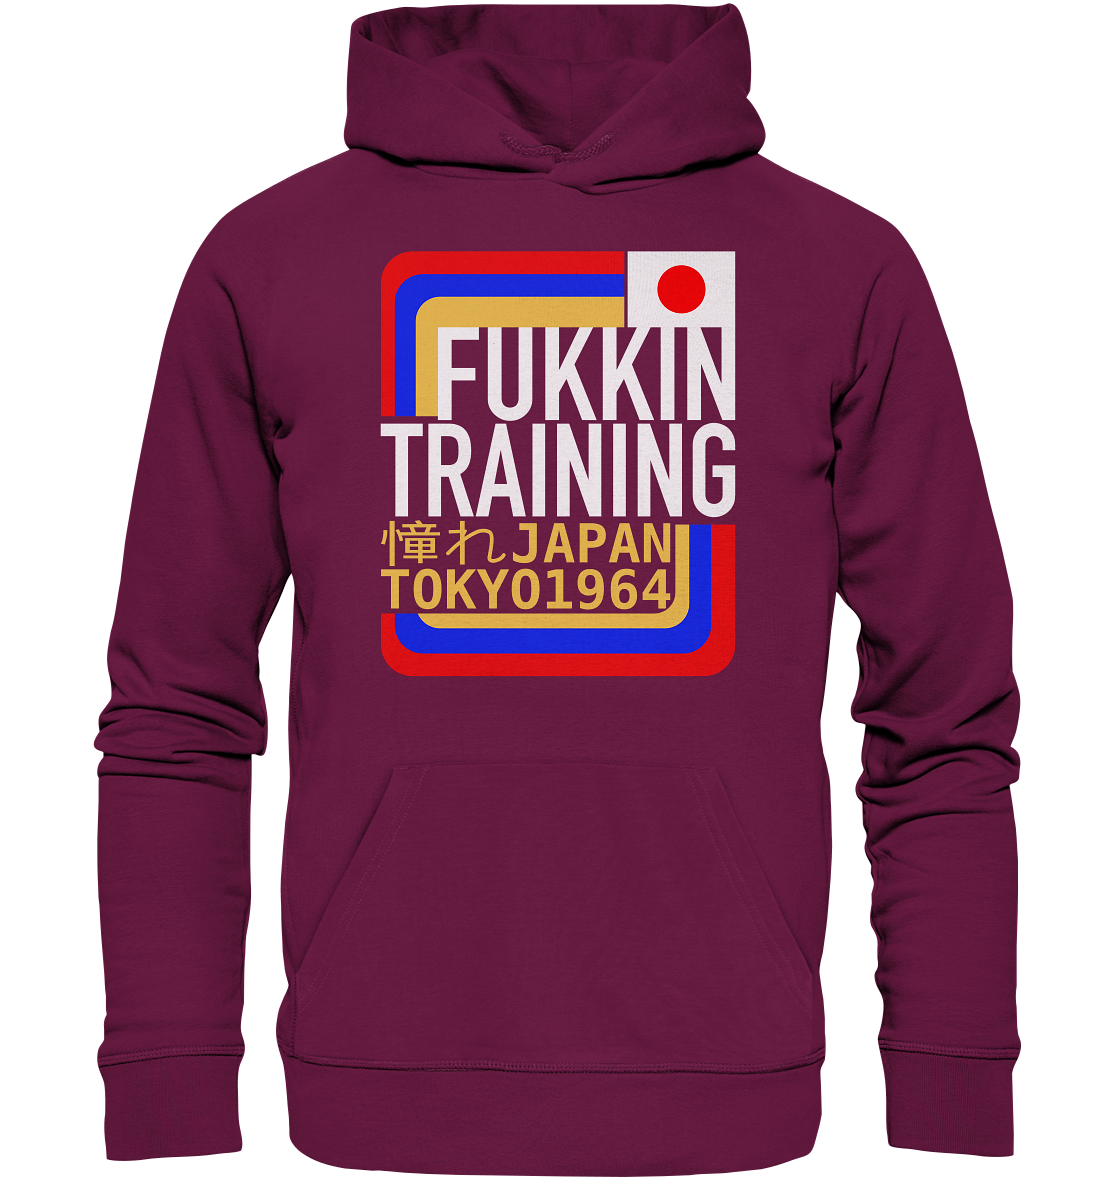 Fukkin Training in Tokyo - Premium Unisex Hoodie